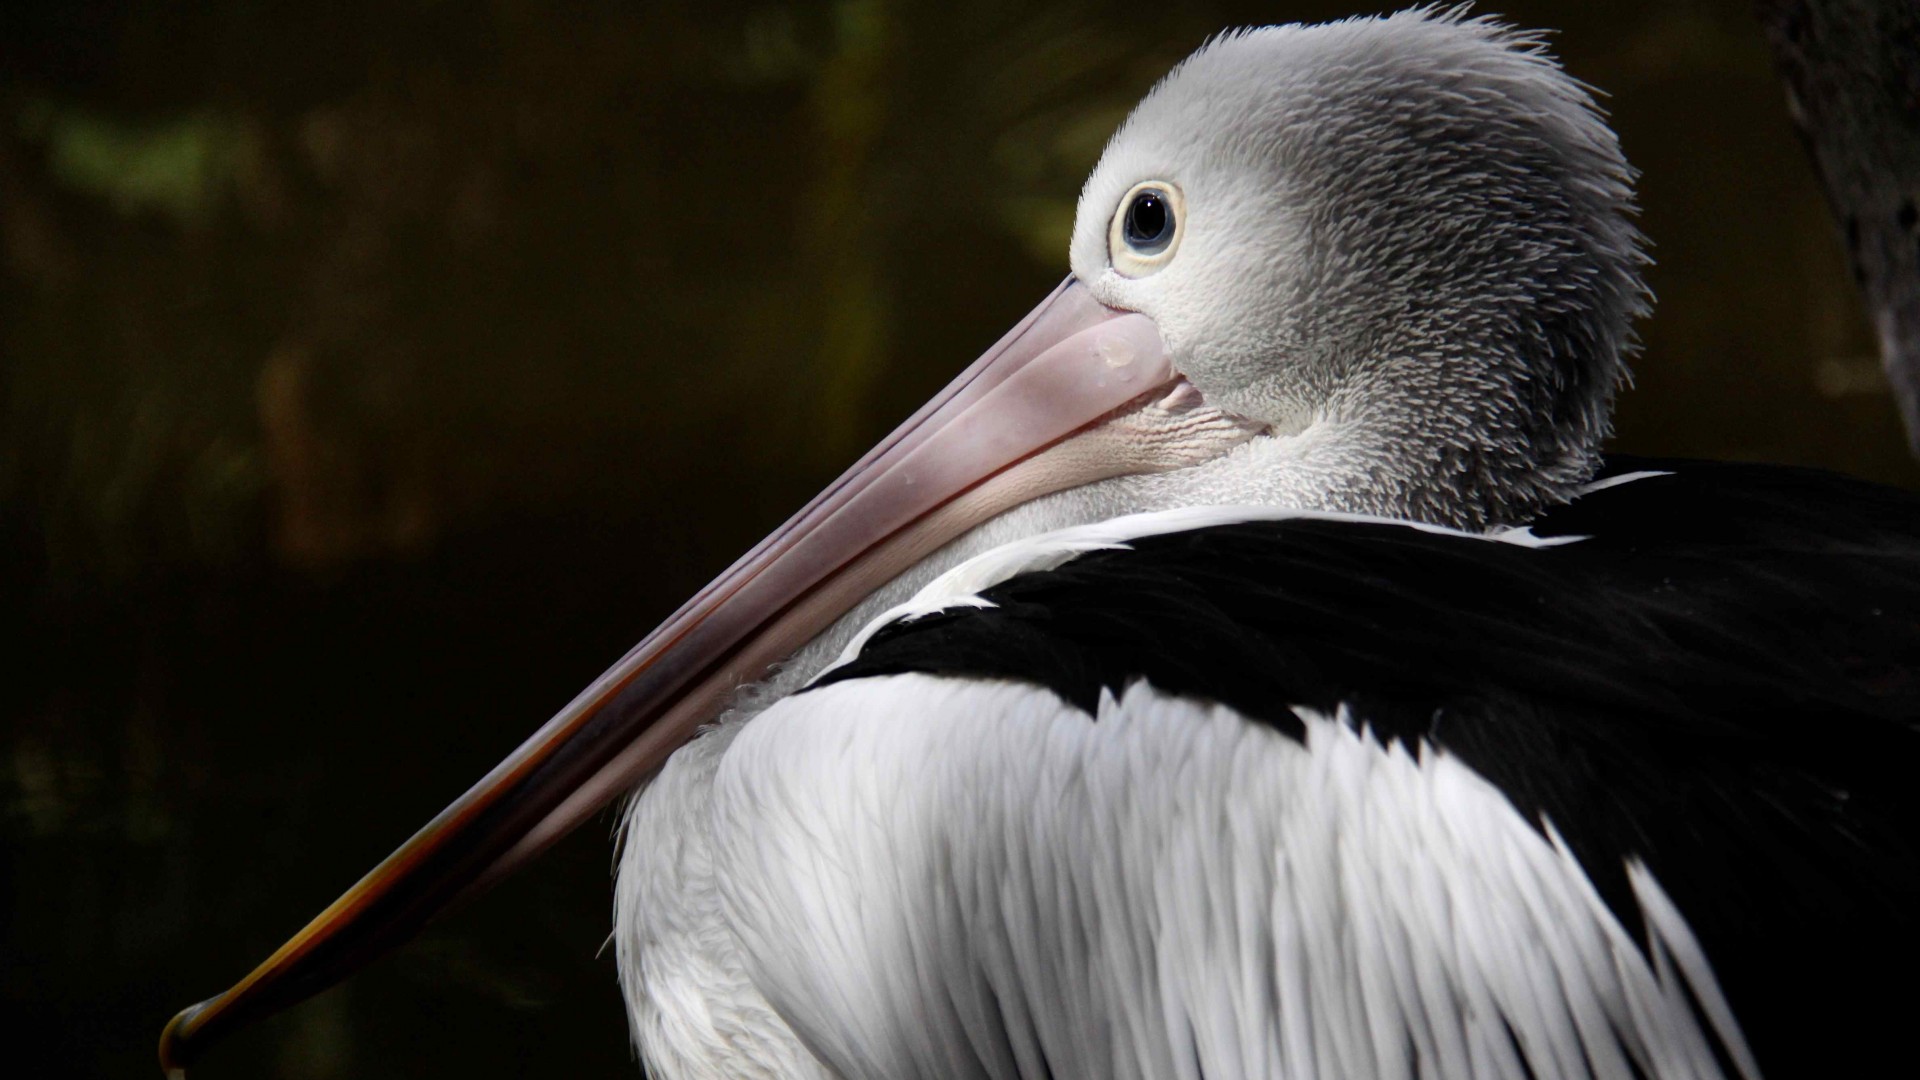 Australian pelican, New Guinea, close-up, white, gray, bird, animal, nature, tourism (horizontal)